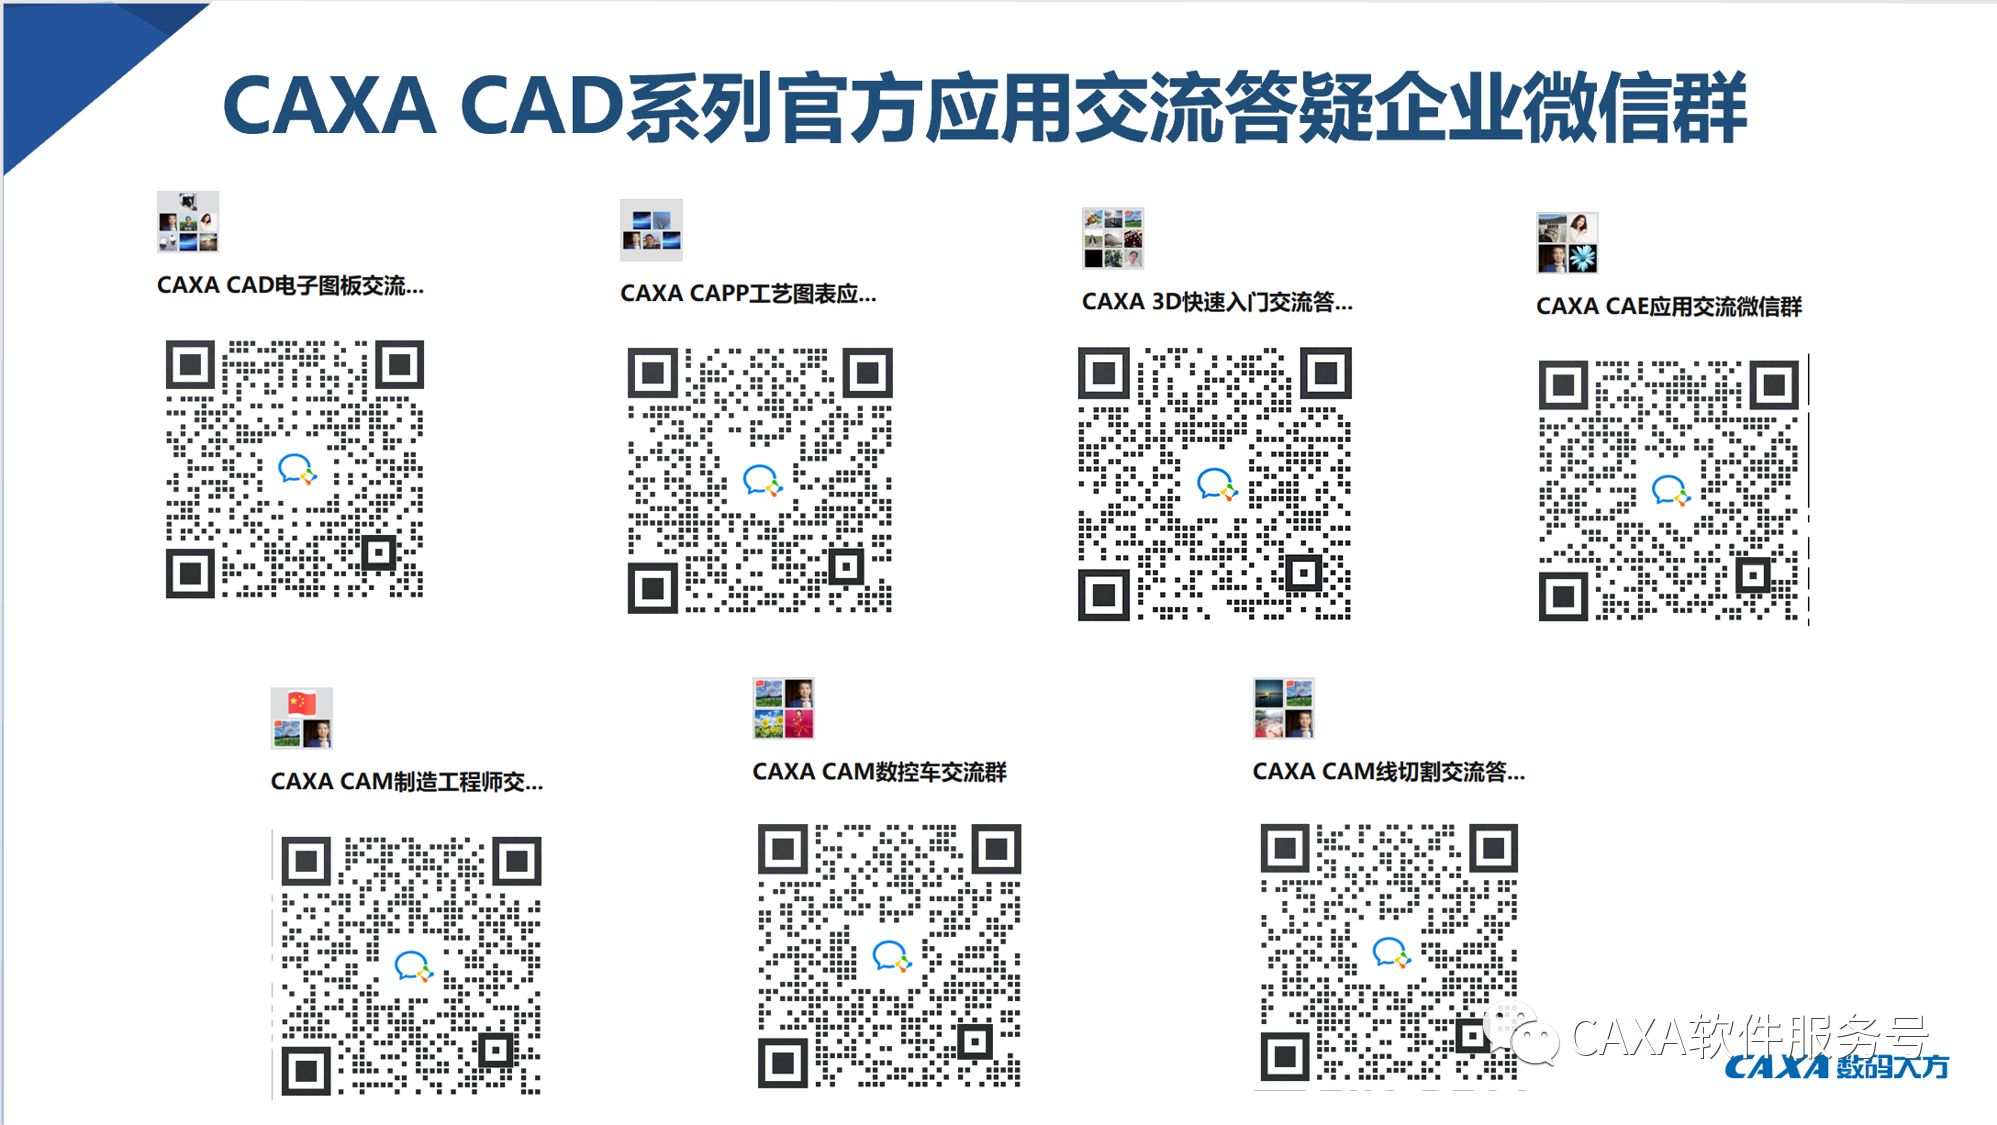 CAXA CAD系列微信群